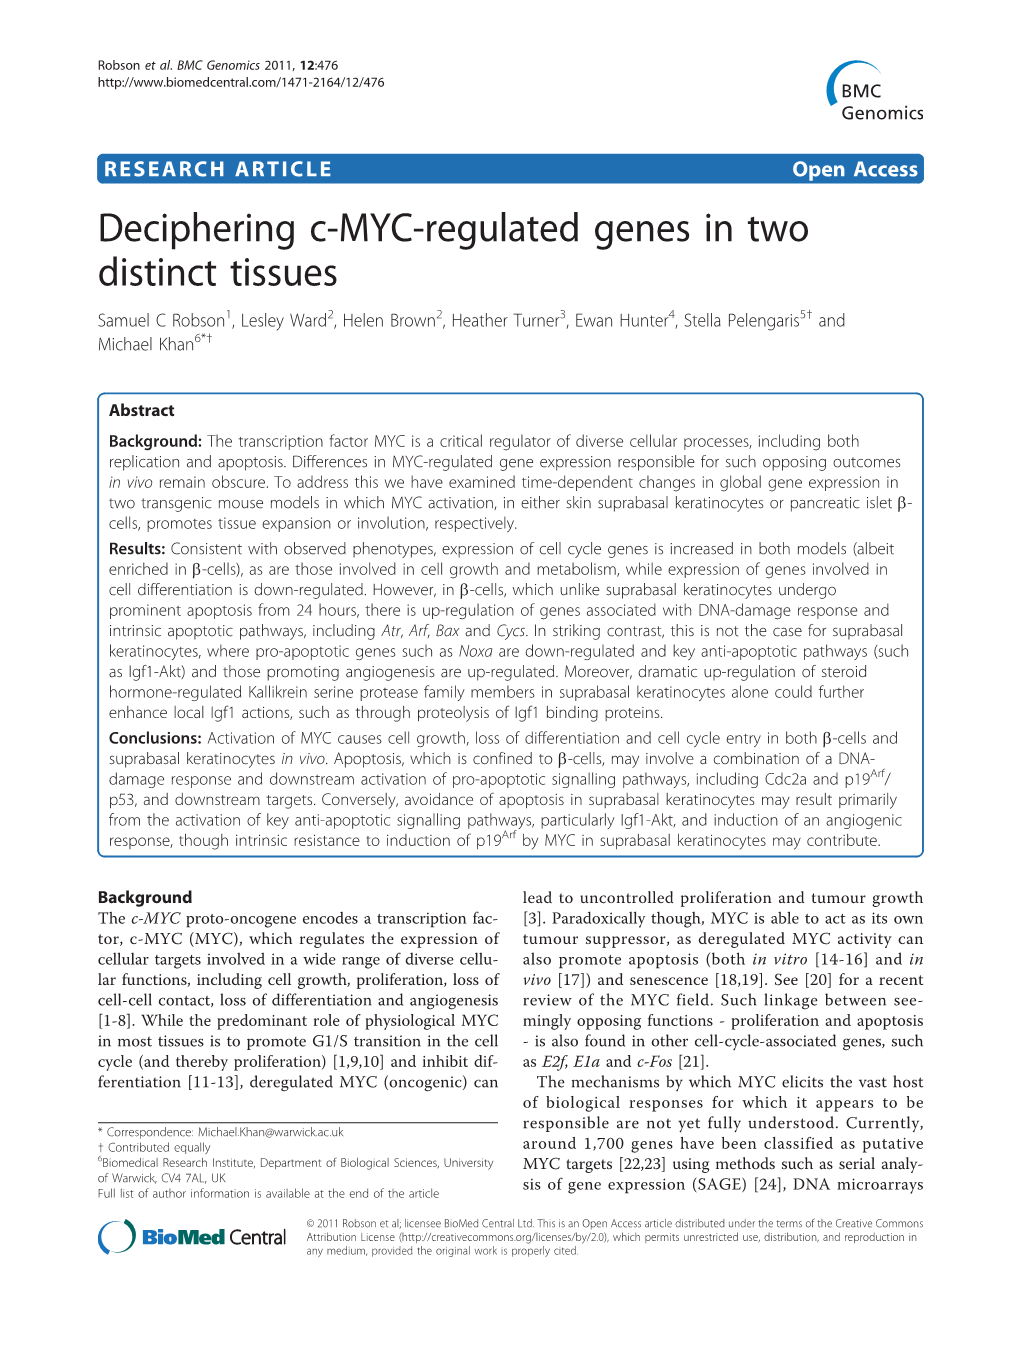 Deciphering C-MYC-Regulated Genes in Two Distinct Tissues